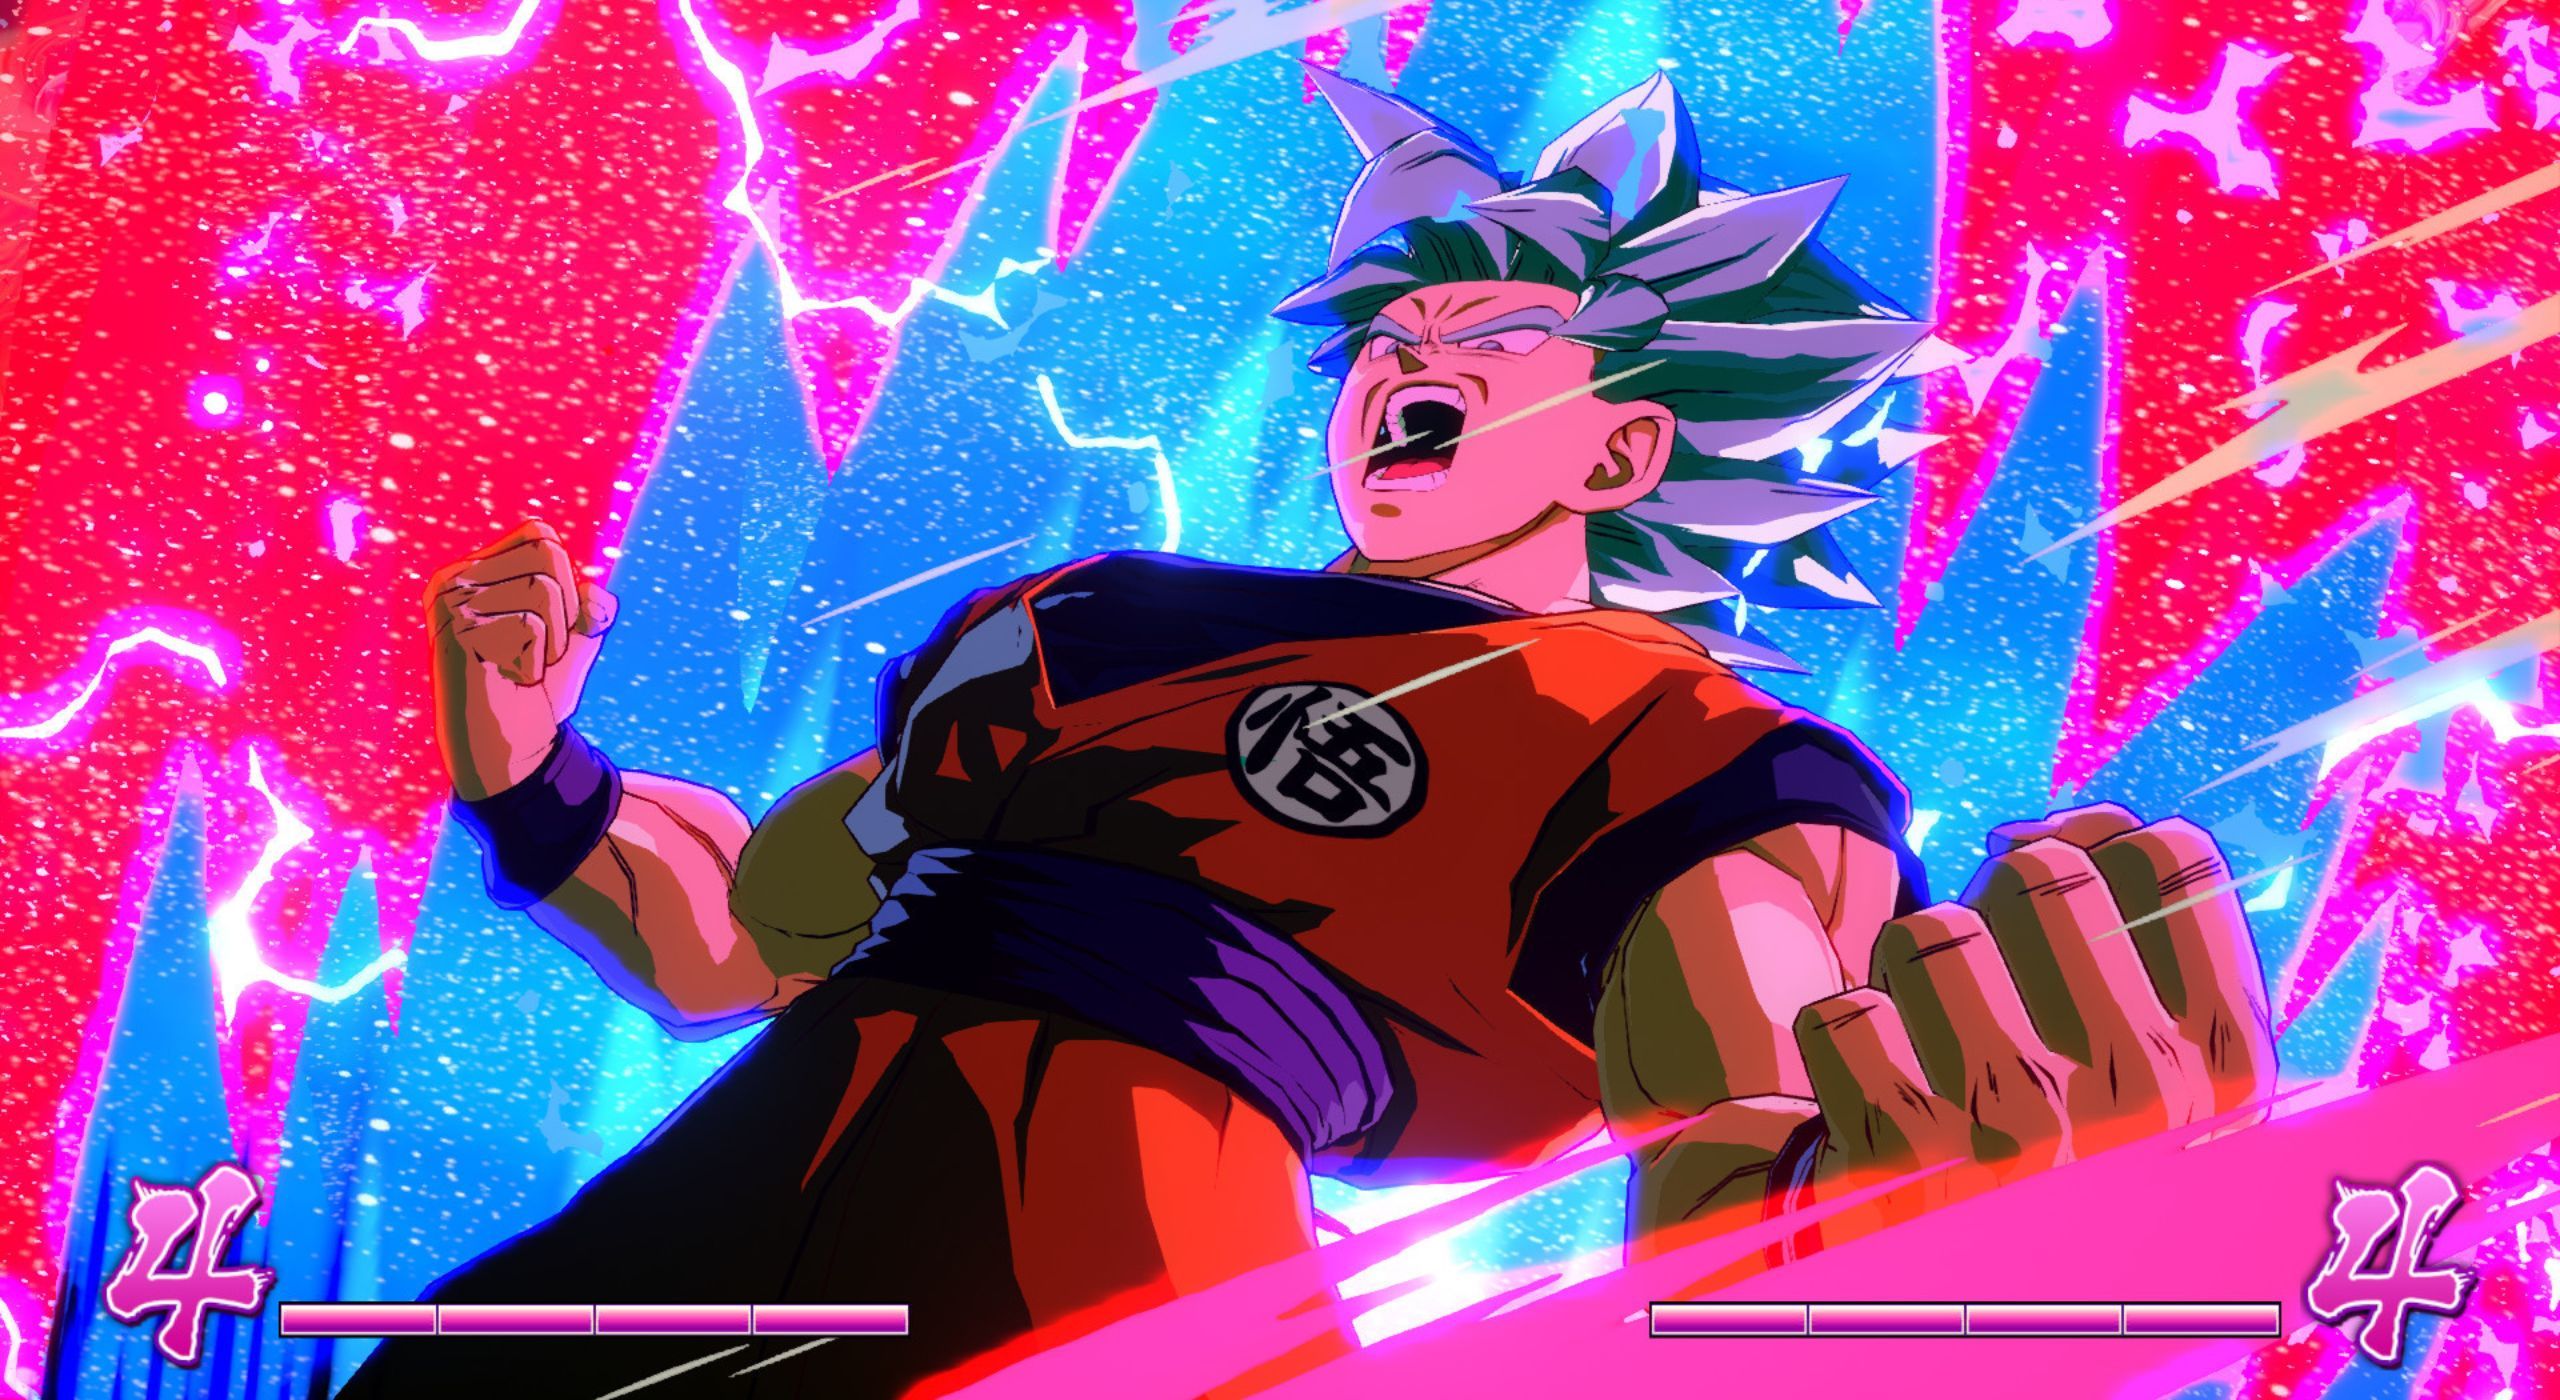 Goku using kioken while Super Saiyan Blue.